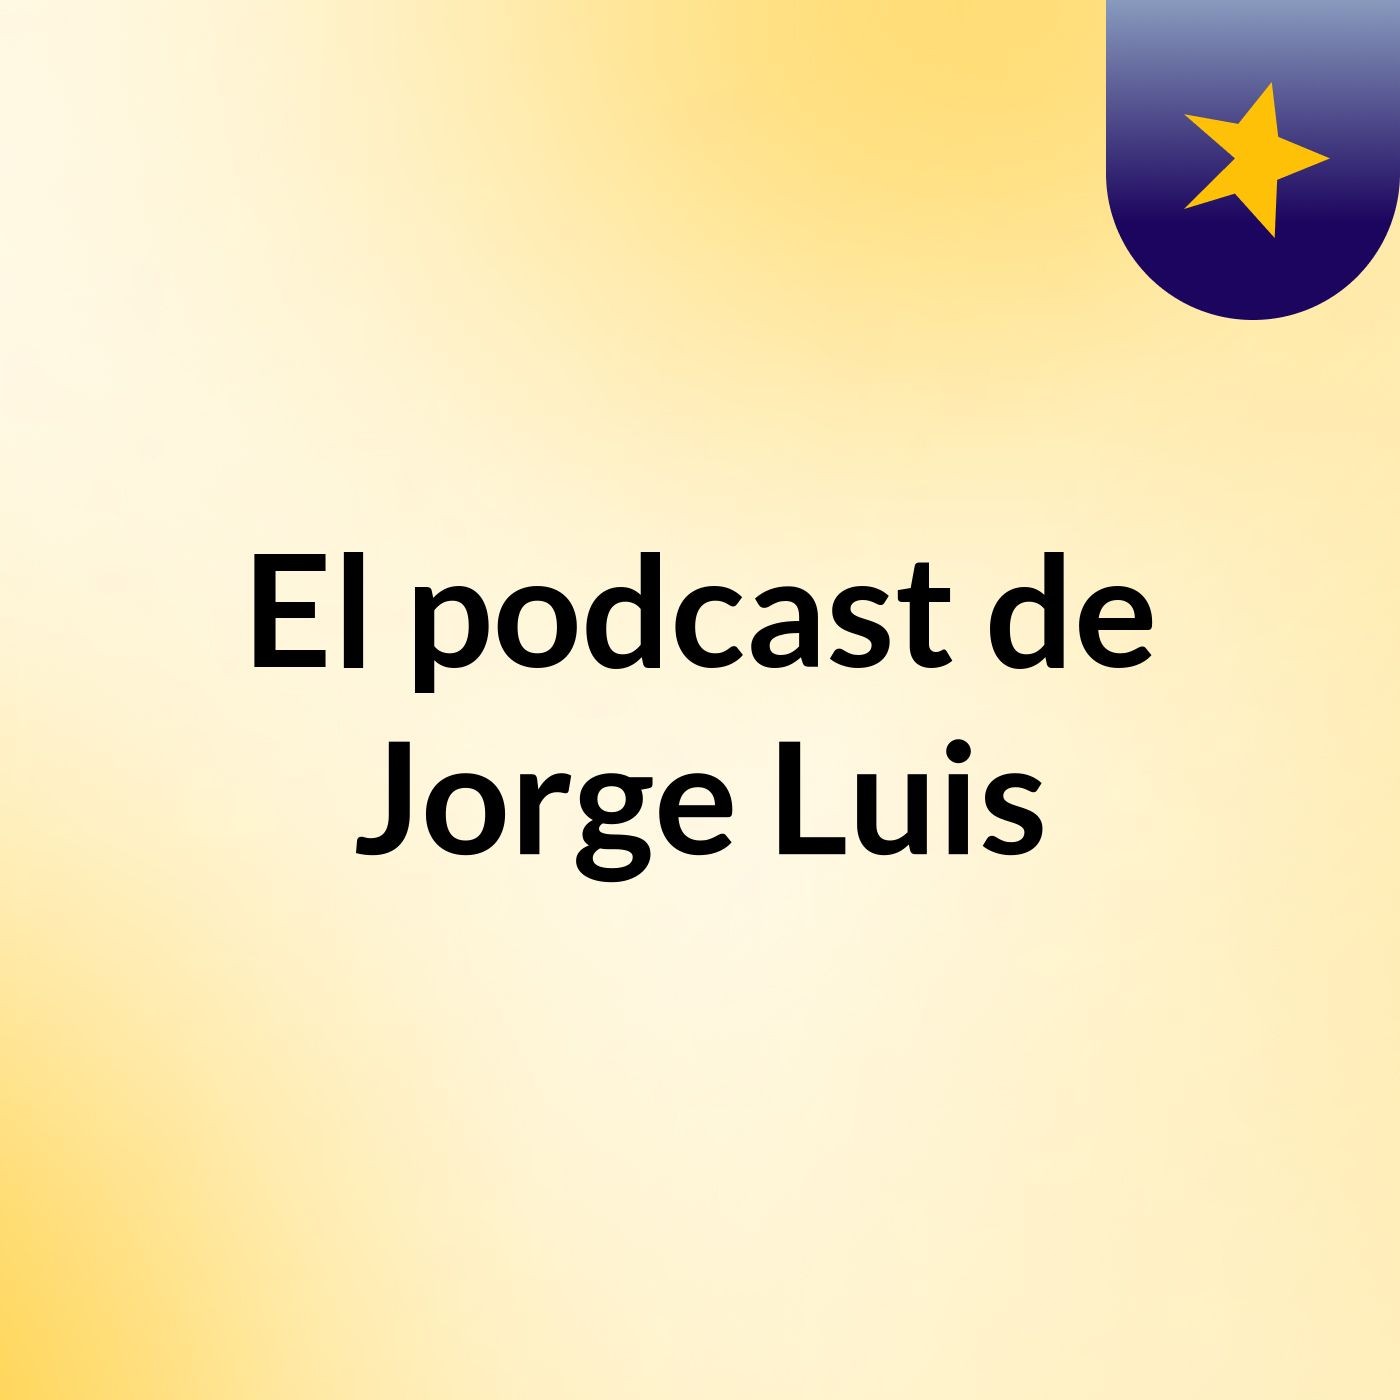 Episodio 2 - El podcast de Jorge Luis